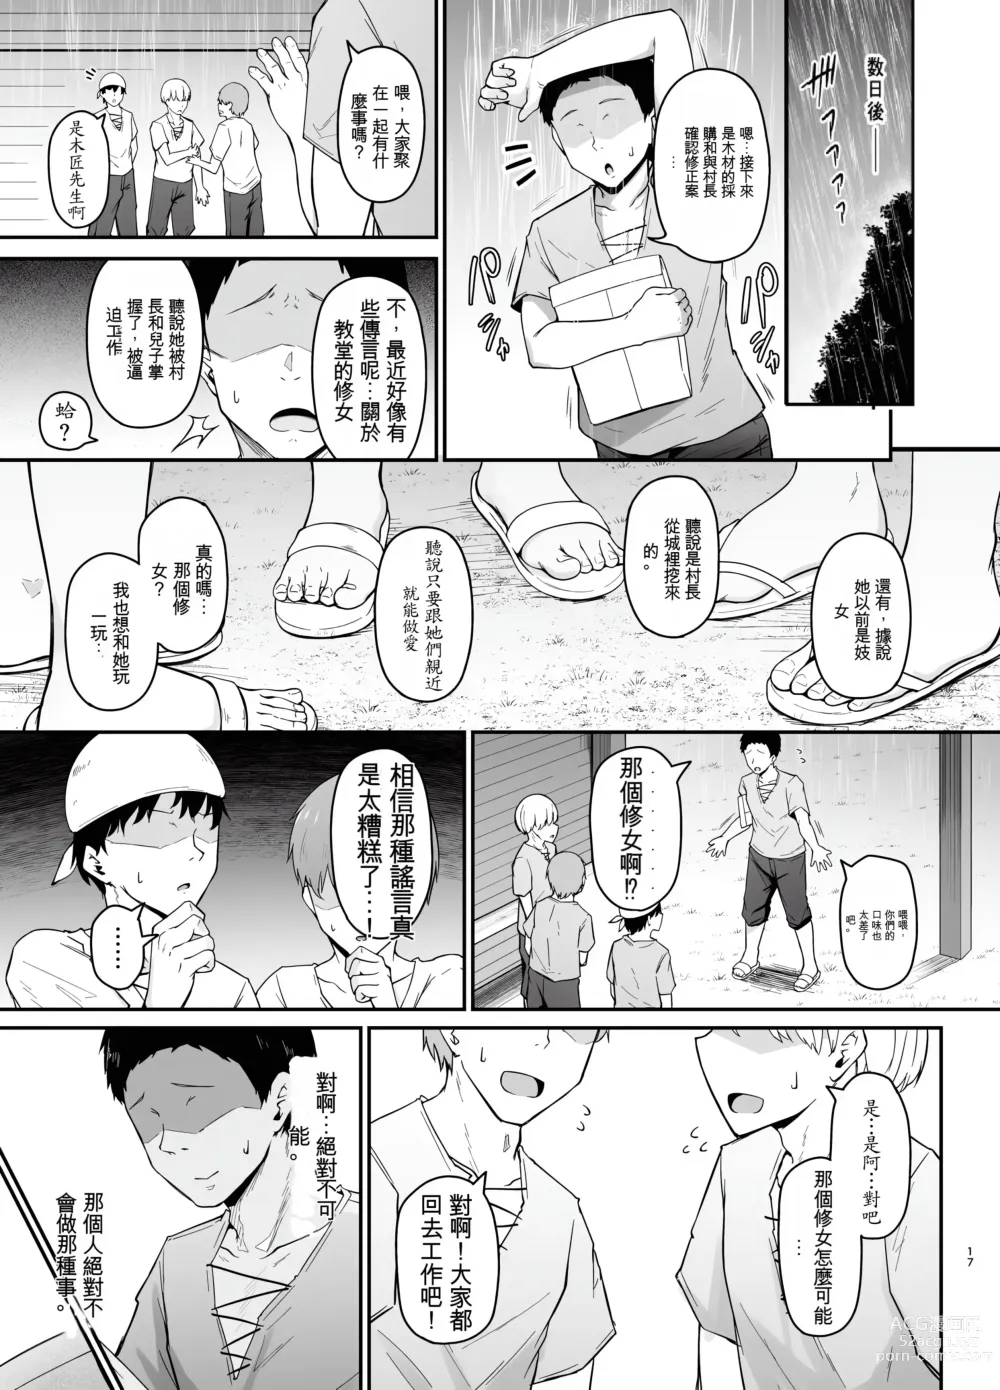 Page 16 of doujinshi 你討厭沒有品味的女人嗎?